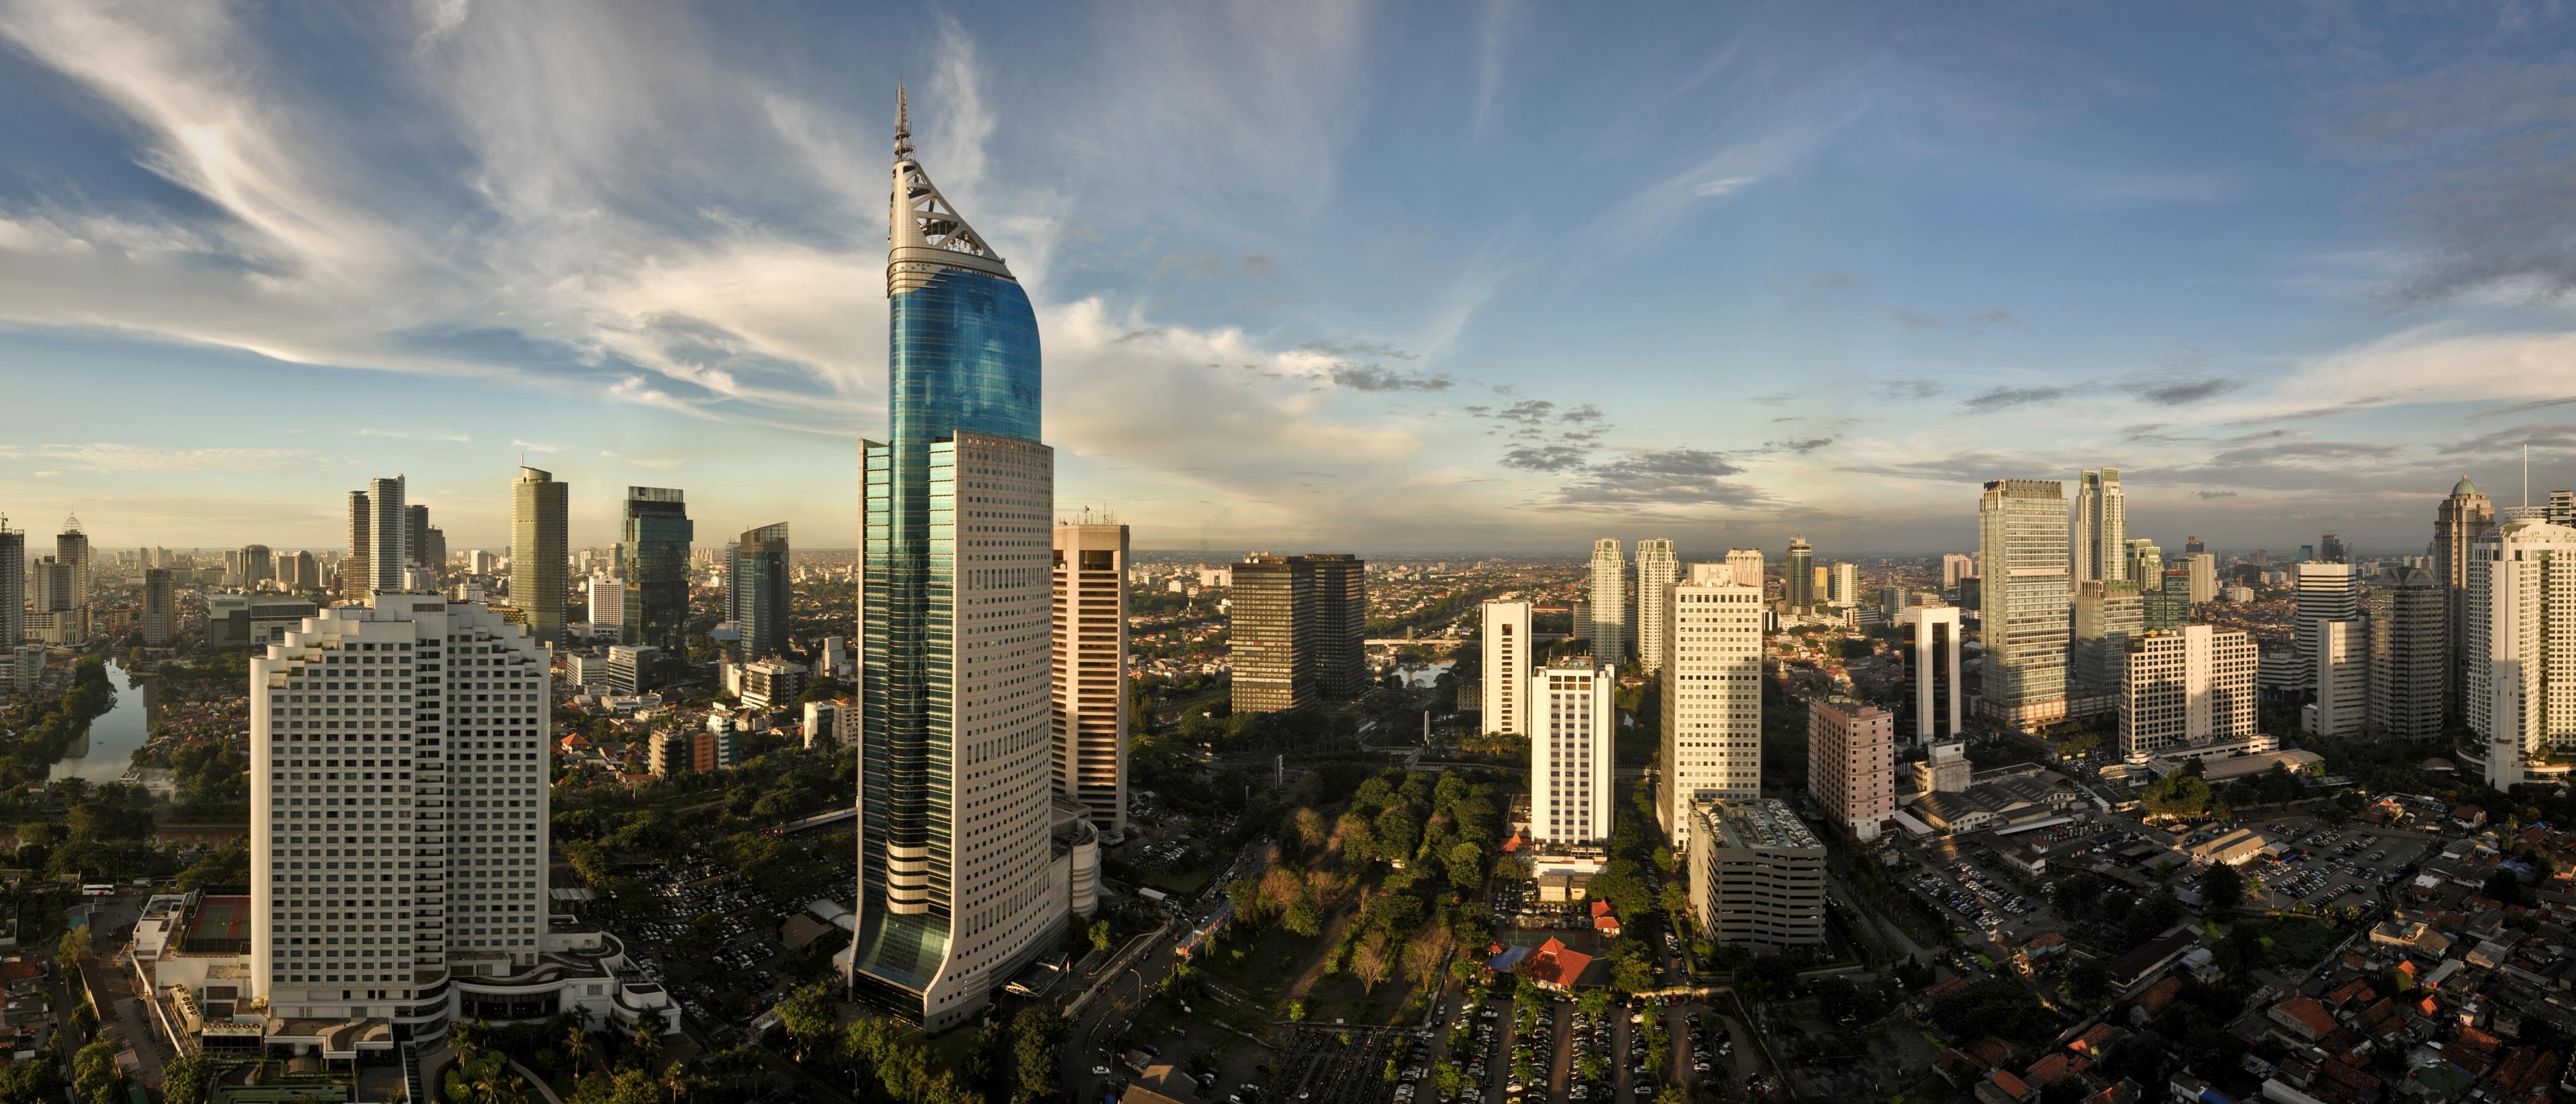 Amazing Jakarta Pictures & Backgrounds